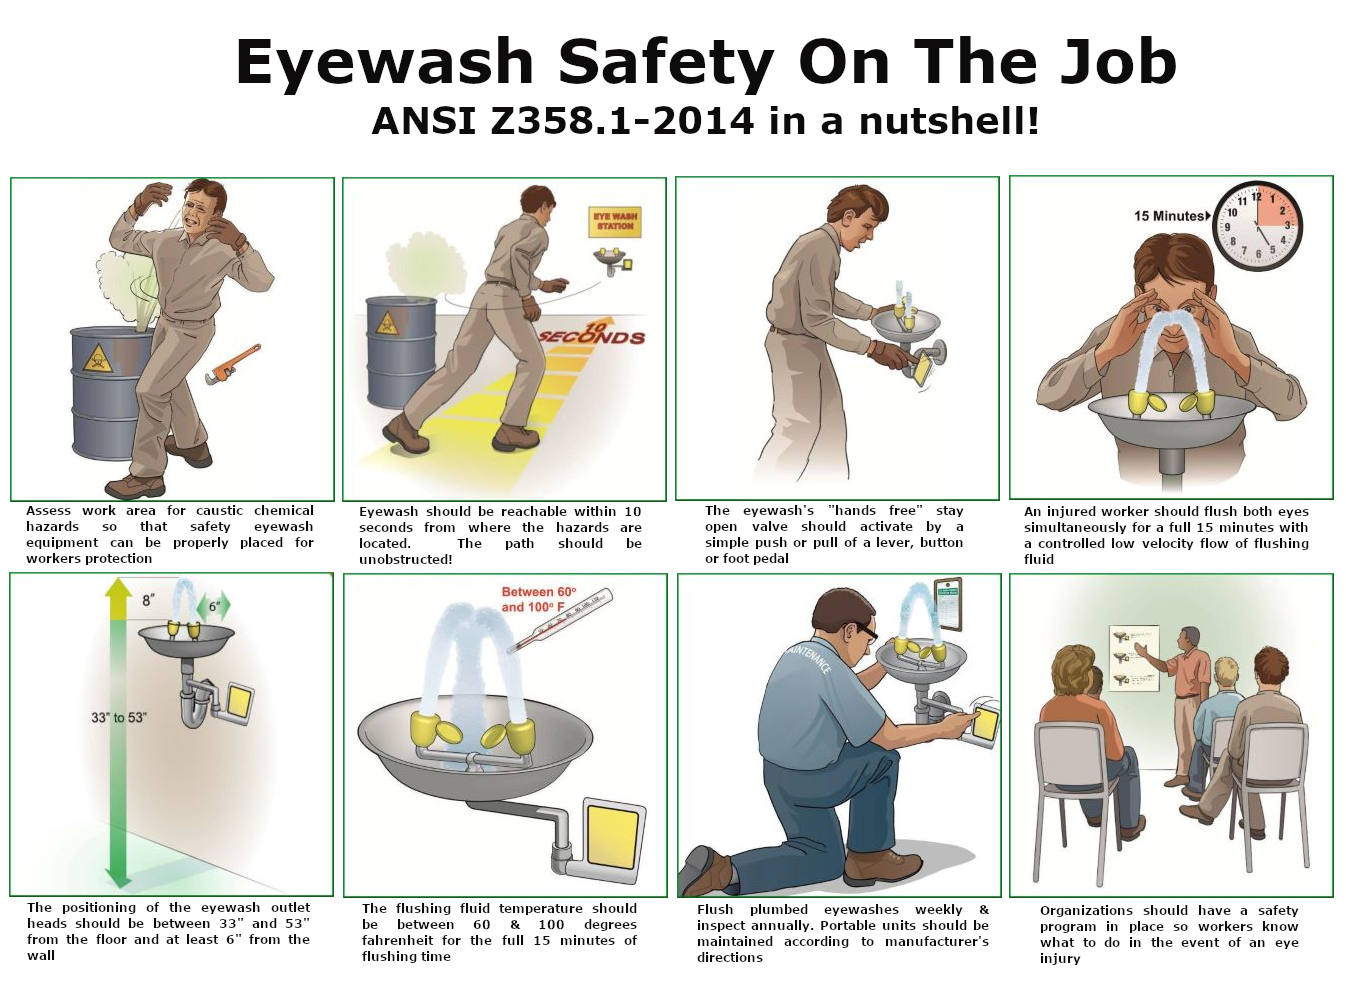 Eyewash Safety on the Job